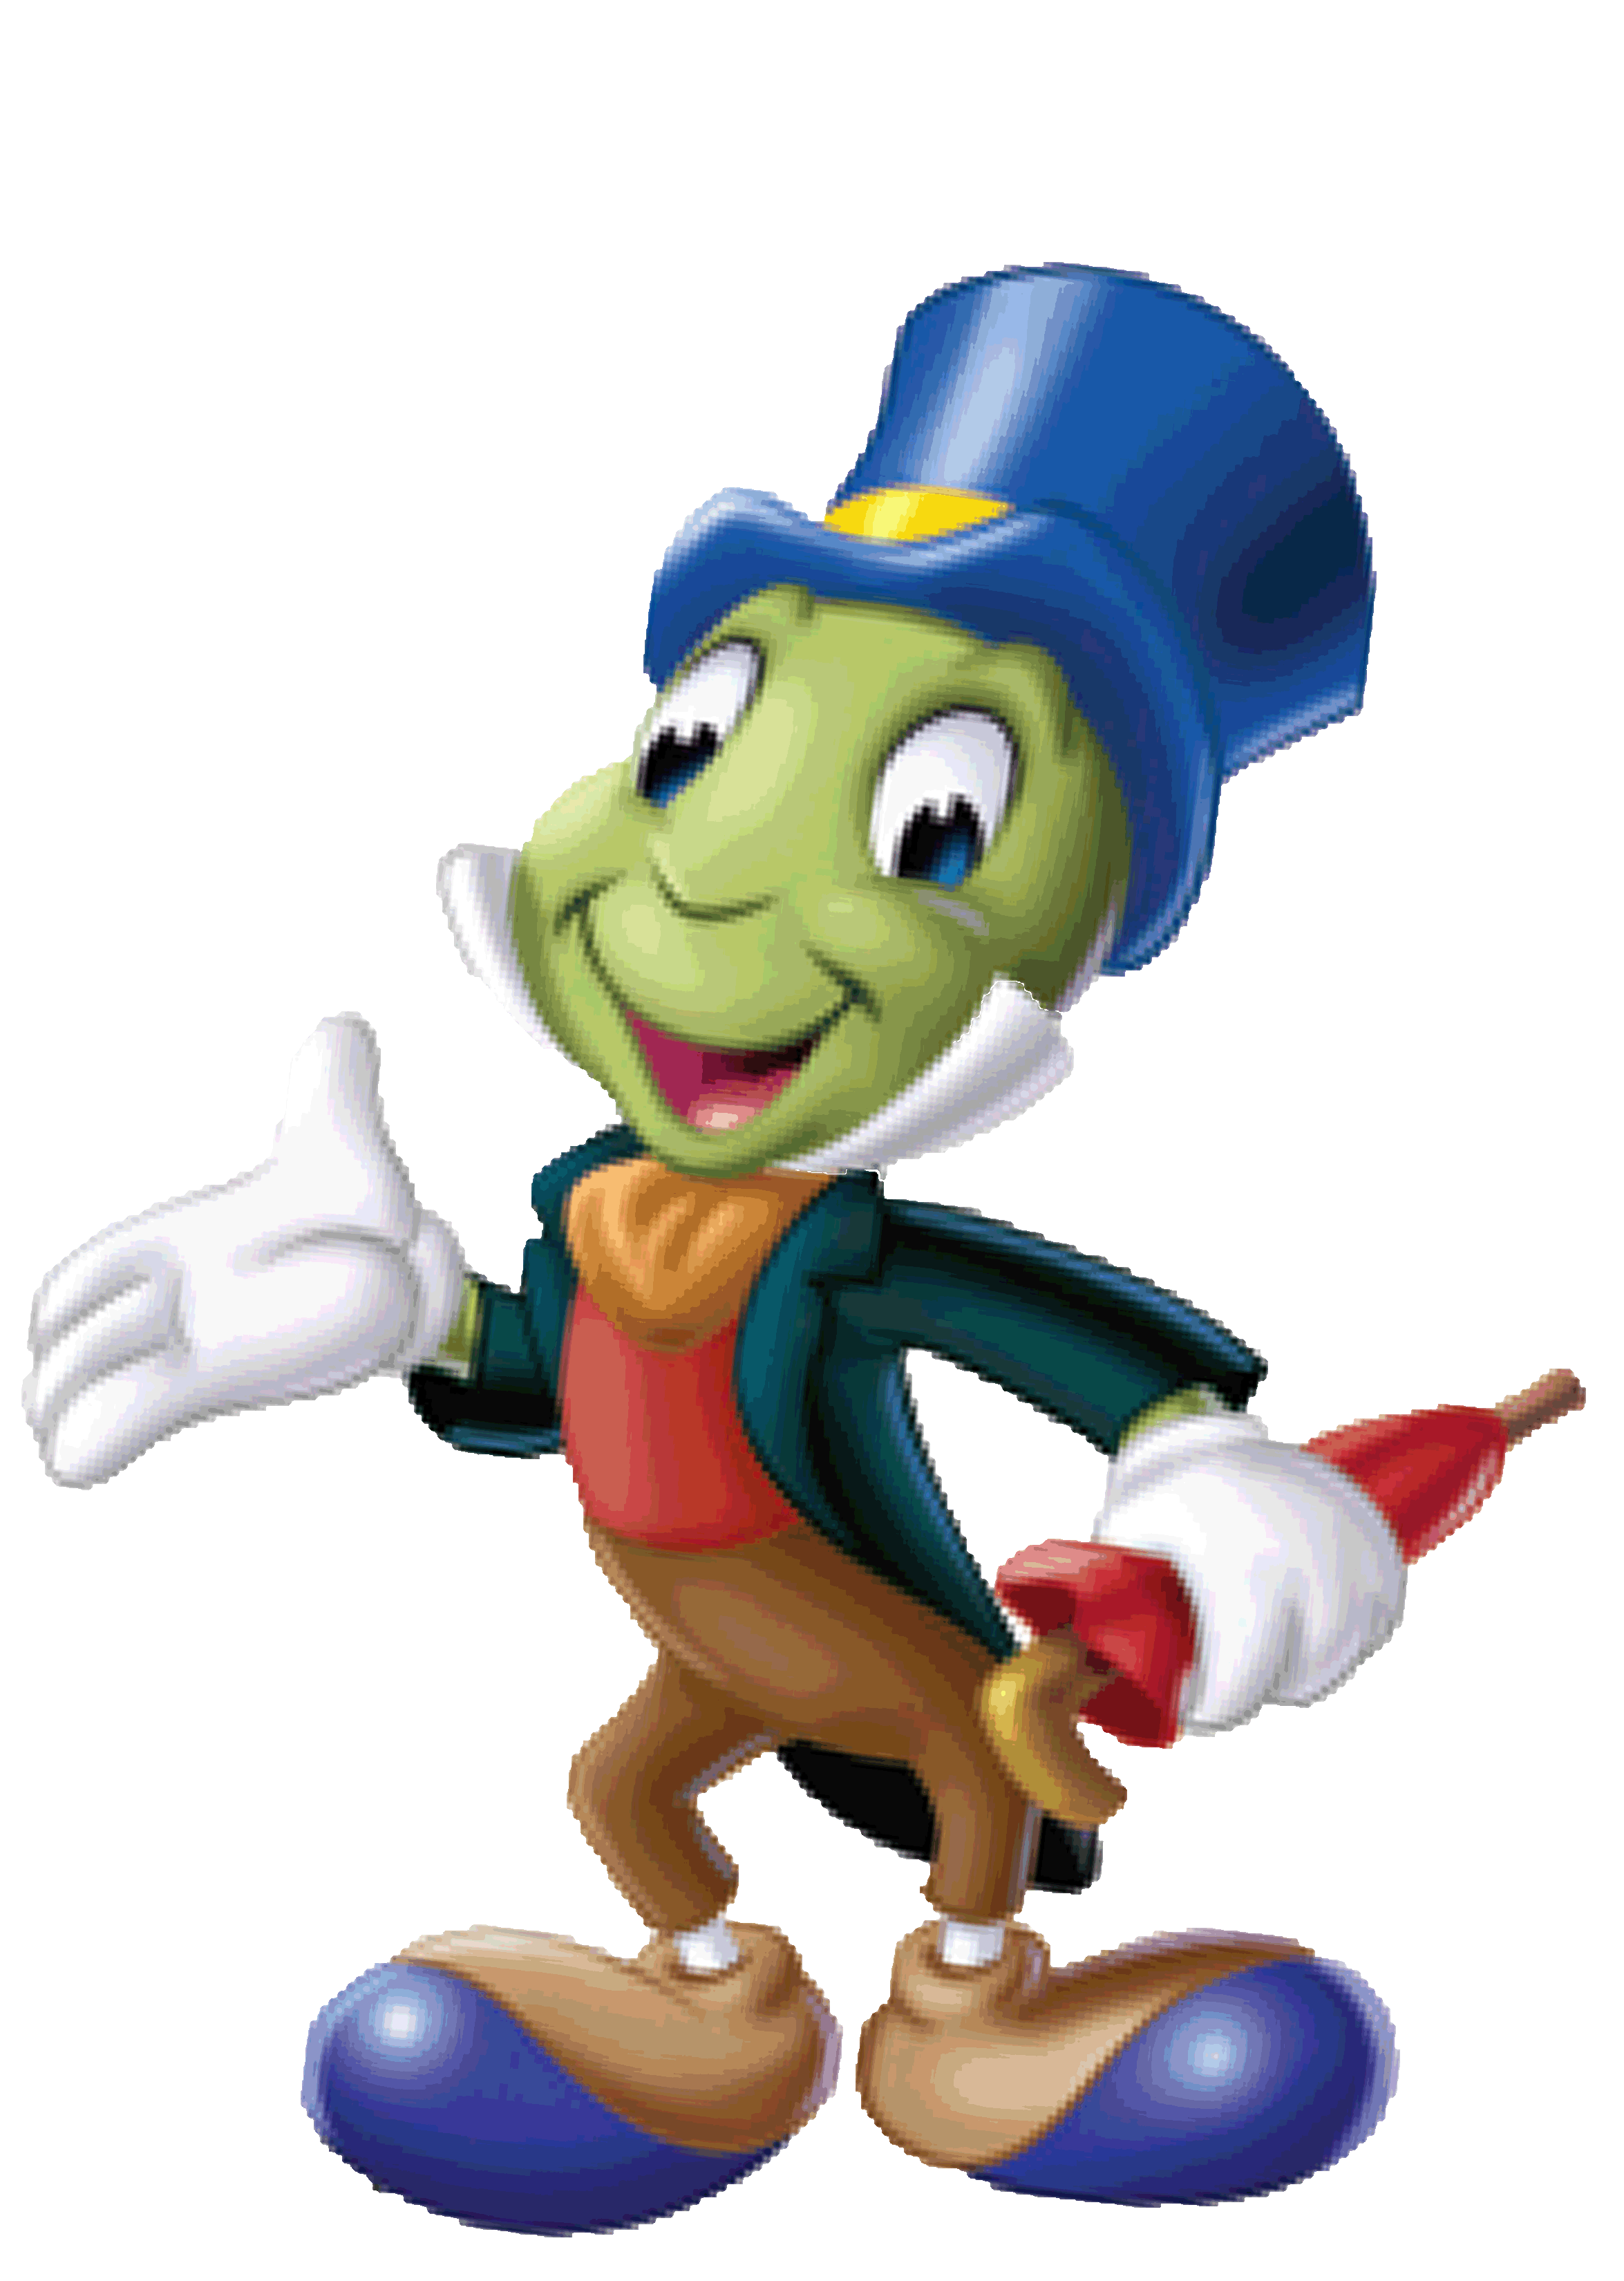 Download PNG image - Jiminy Cricket PNG Transparent Image 